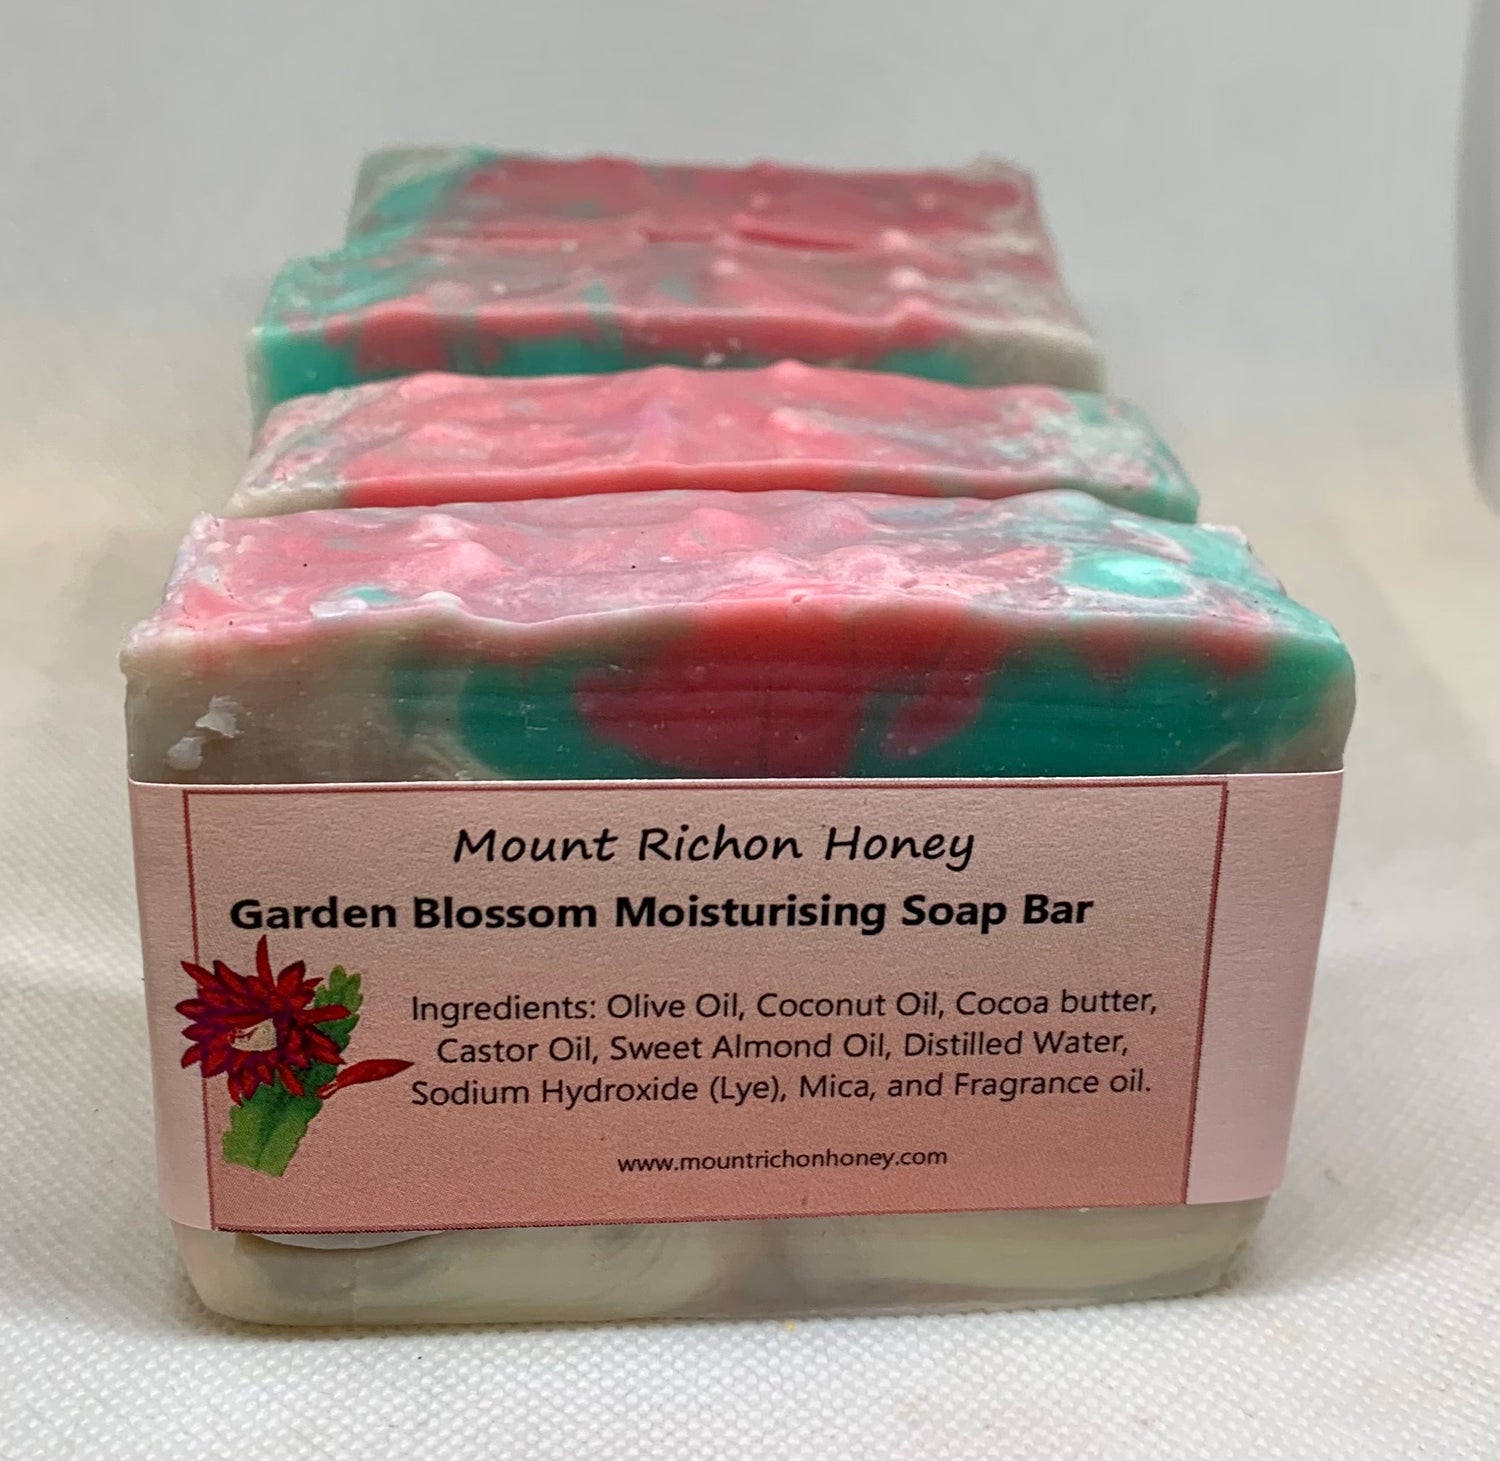 Garden Blossom Moisturising Soap Bar